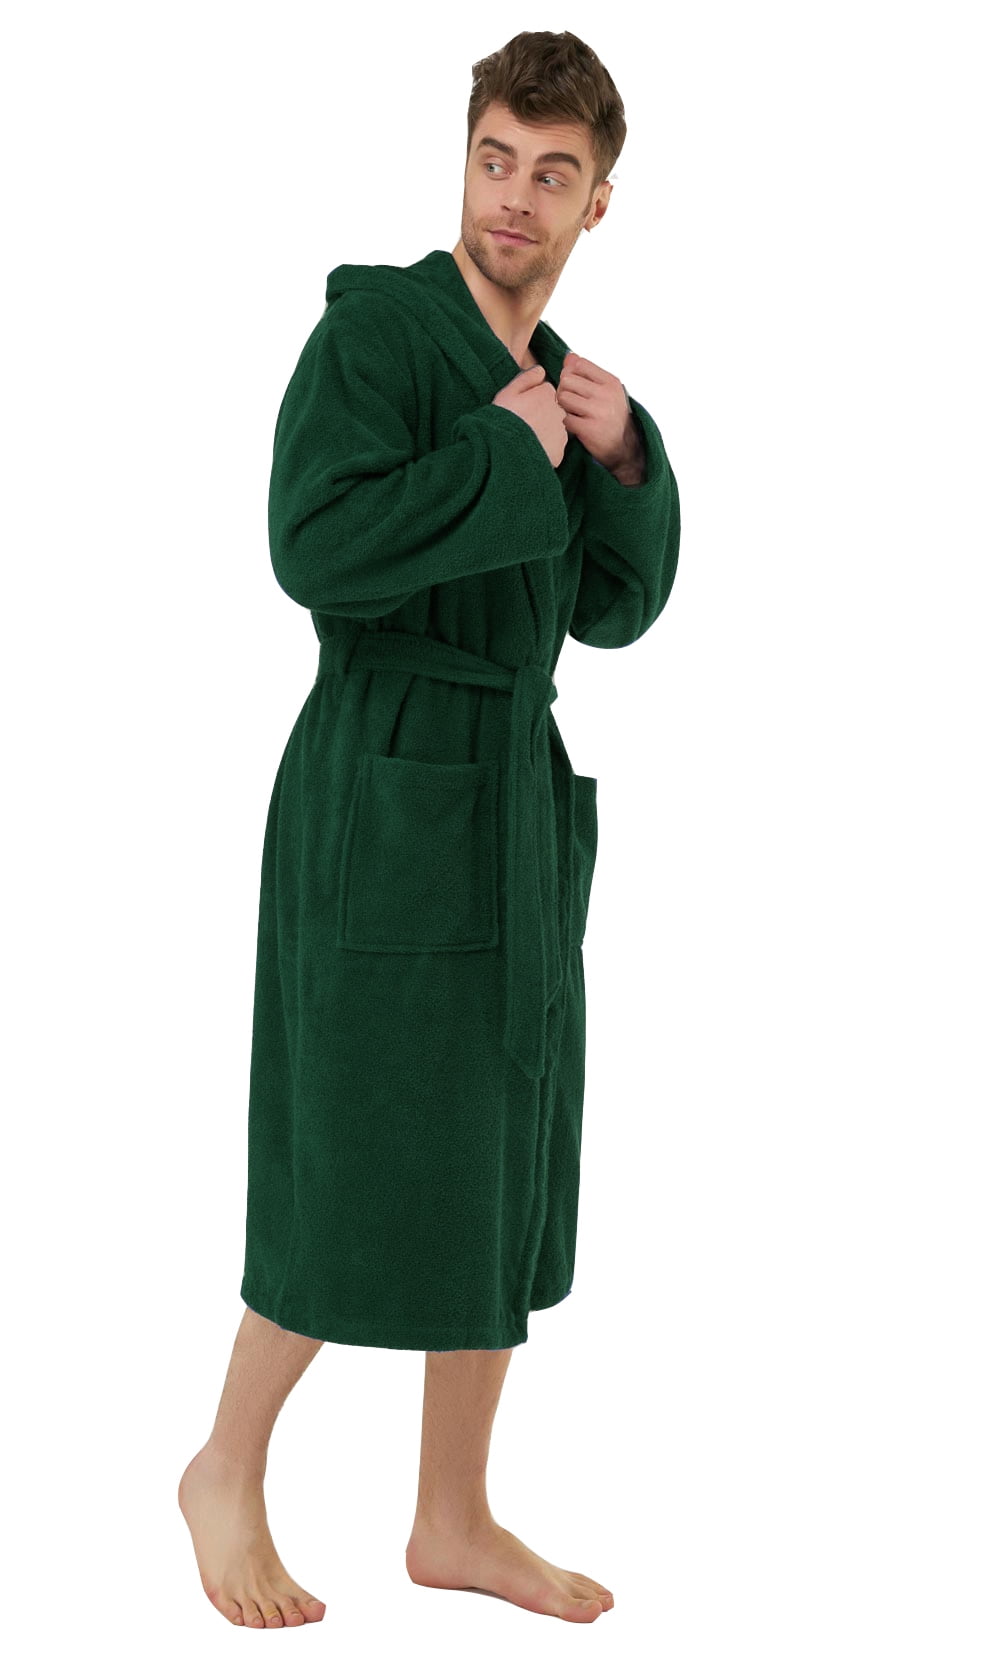 Mens Hunter Green Housecoat 100% Cotton Hooded Bathrobe XL - Walmart.com